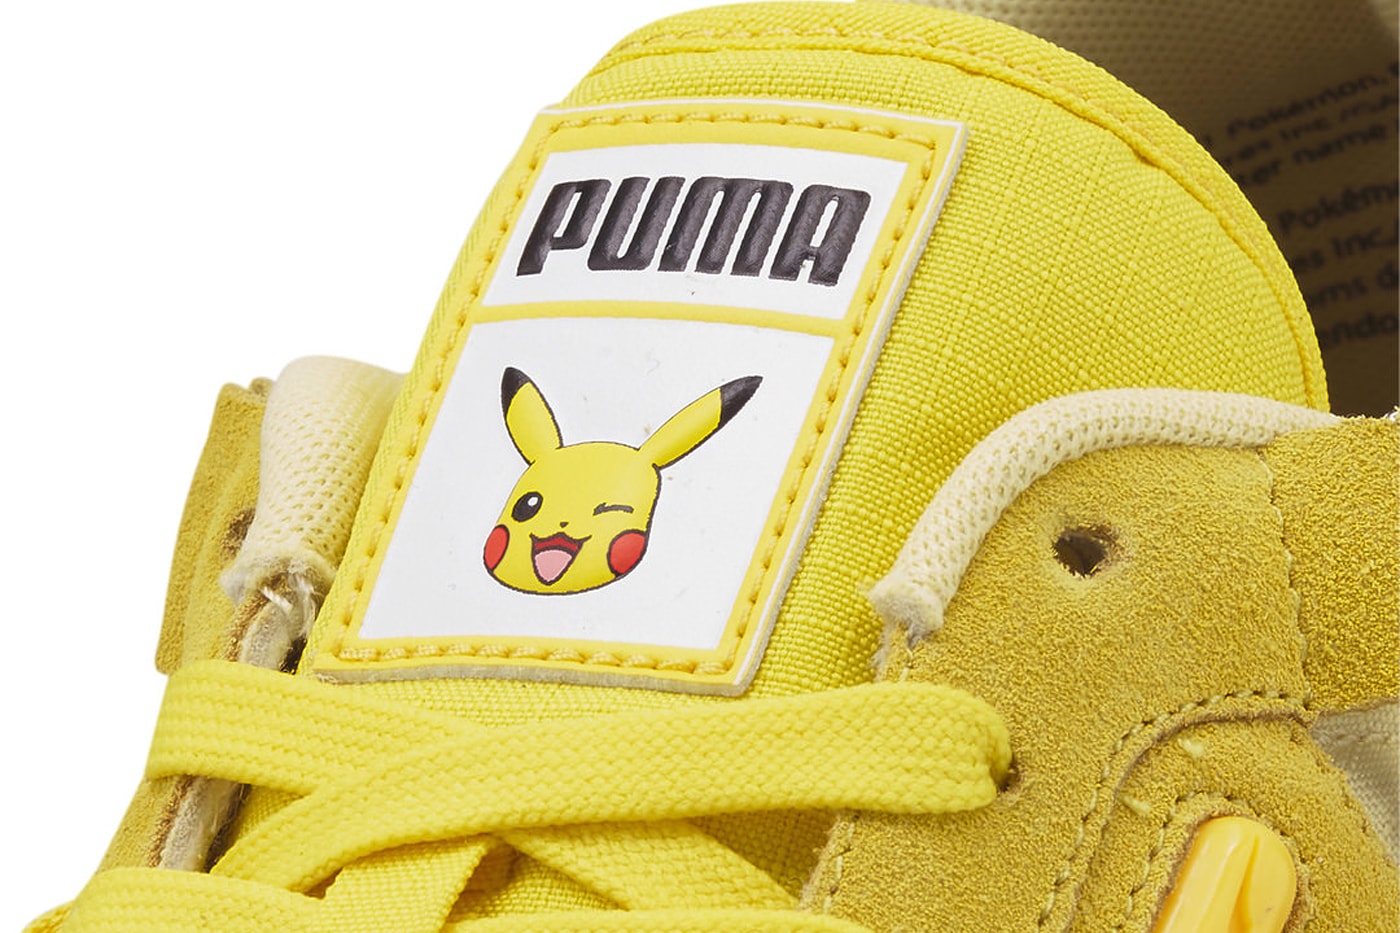 Puma Rider FV Pikachu Trainers Yellow